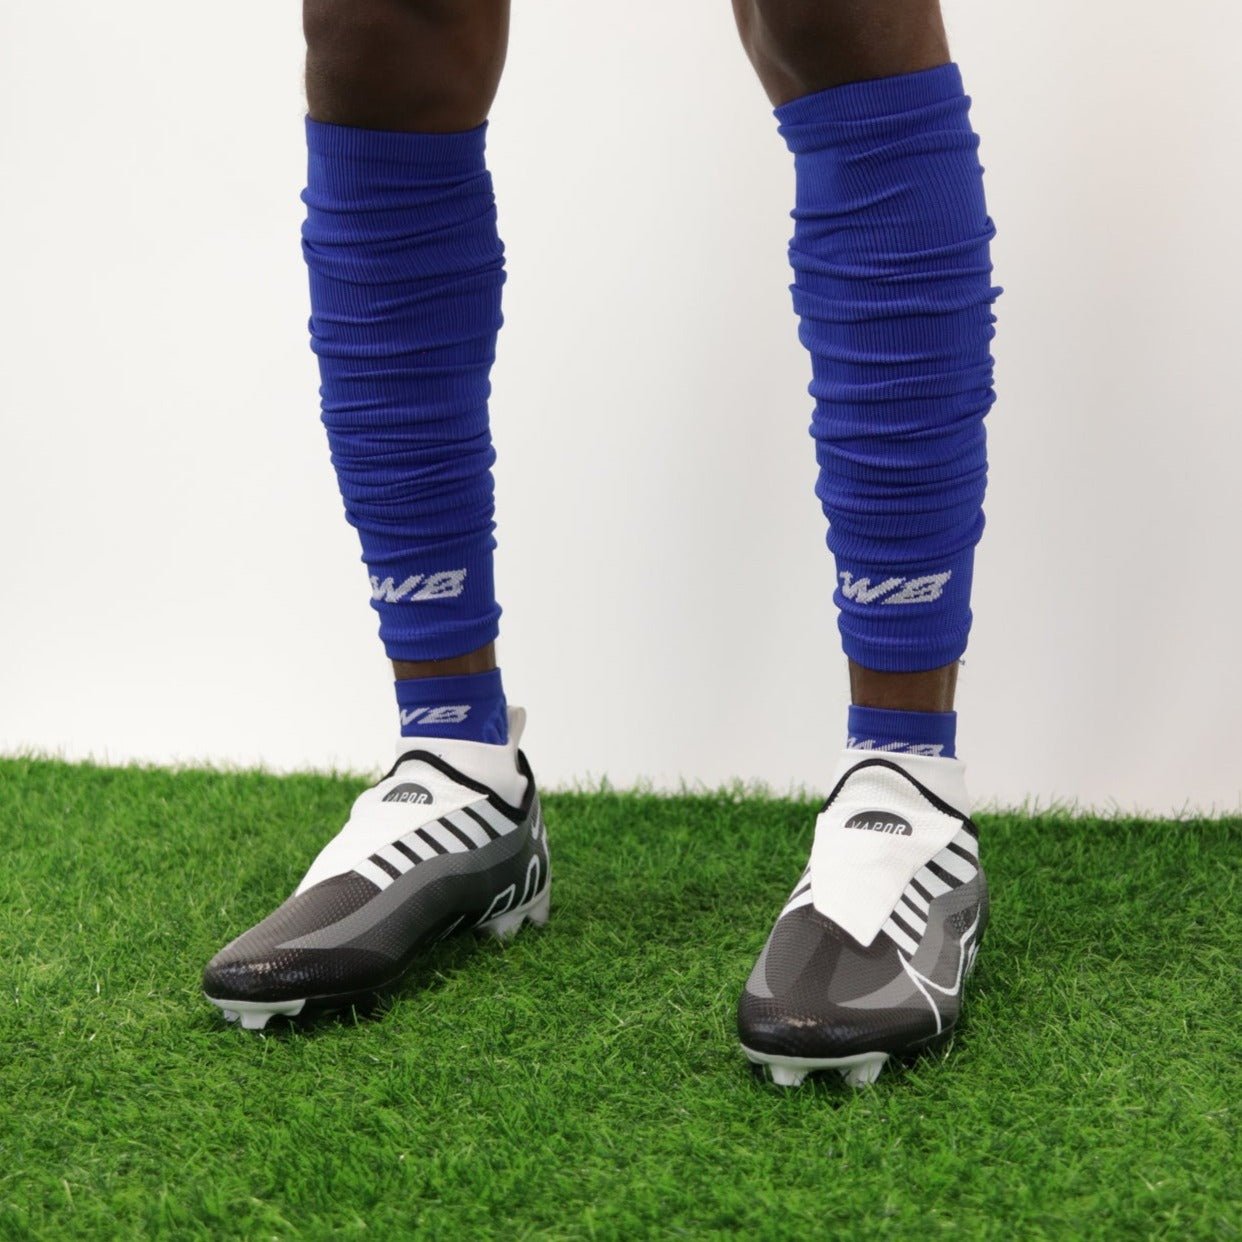 ADULT FOOTBALL LEG SLEEVES 2.0 (BLUE) - We Ball Sports